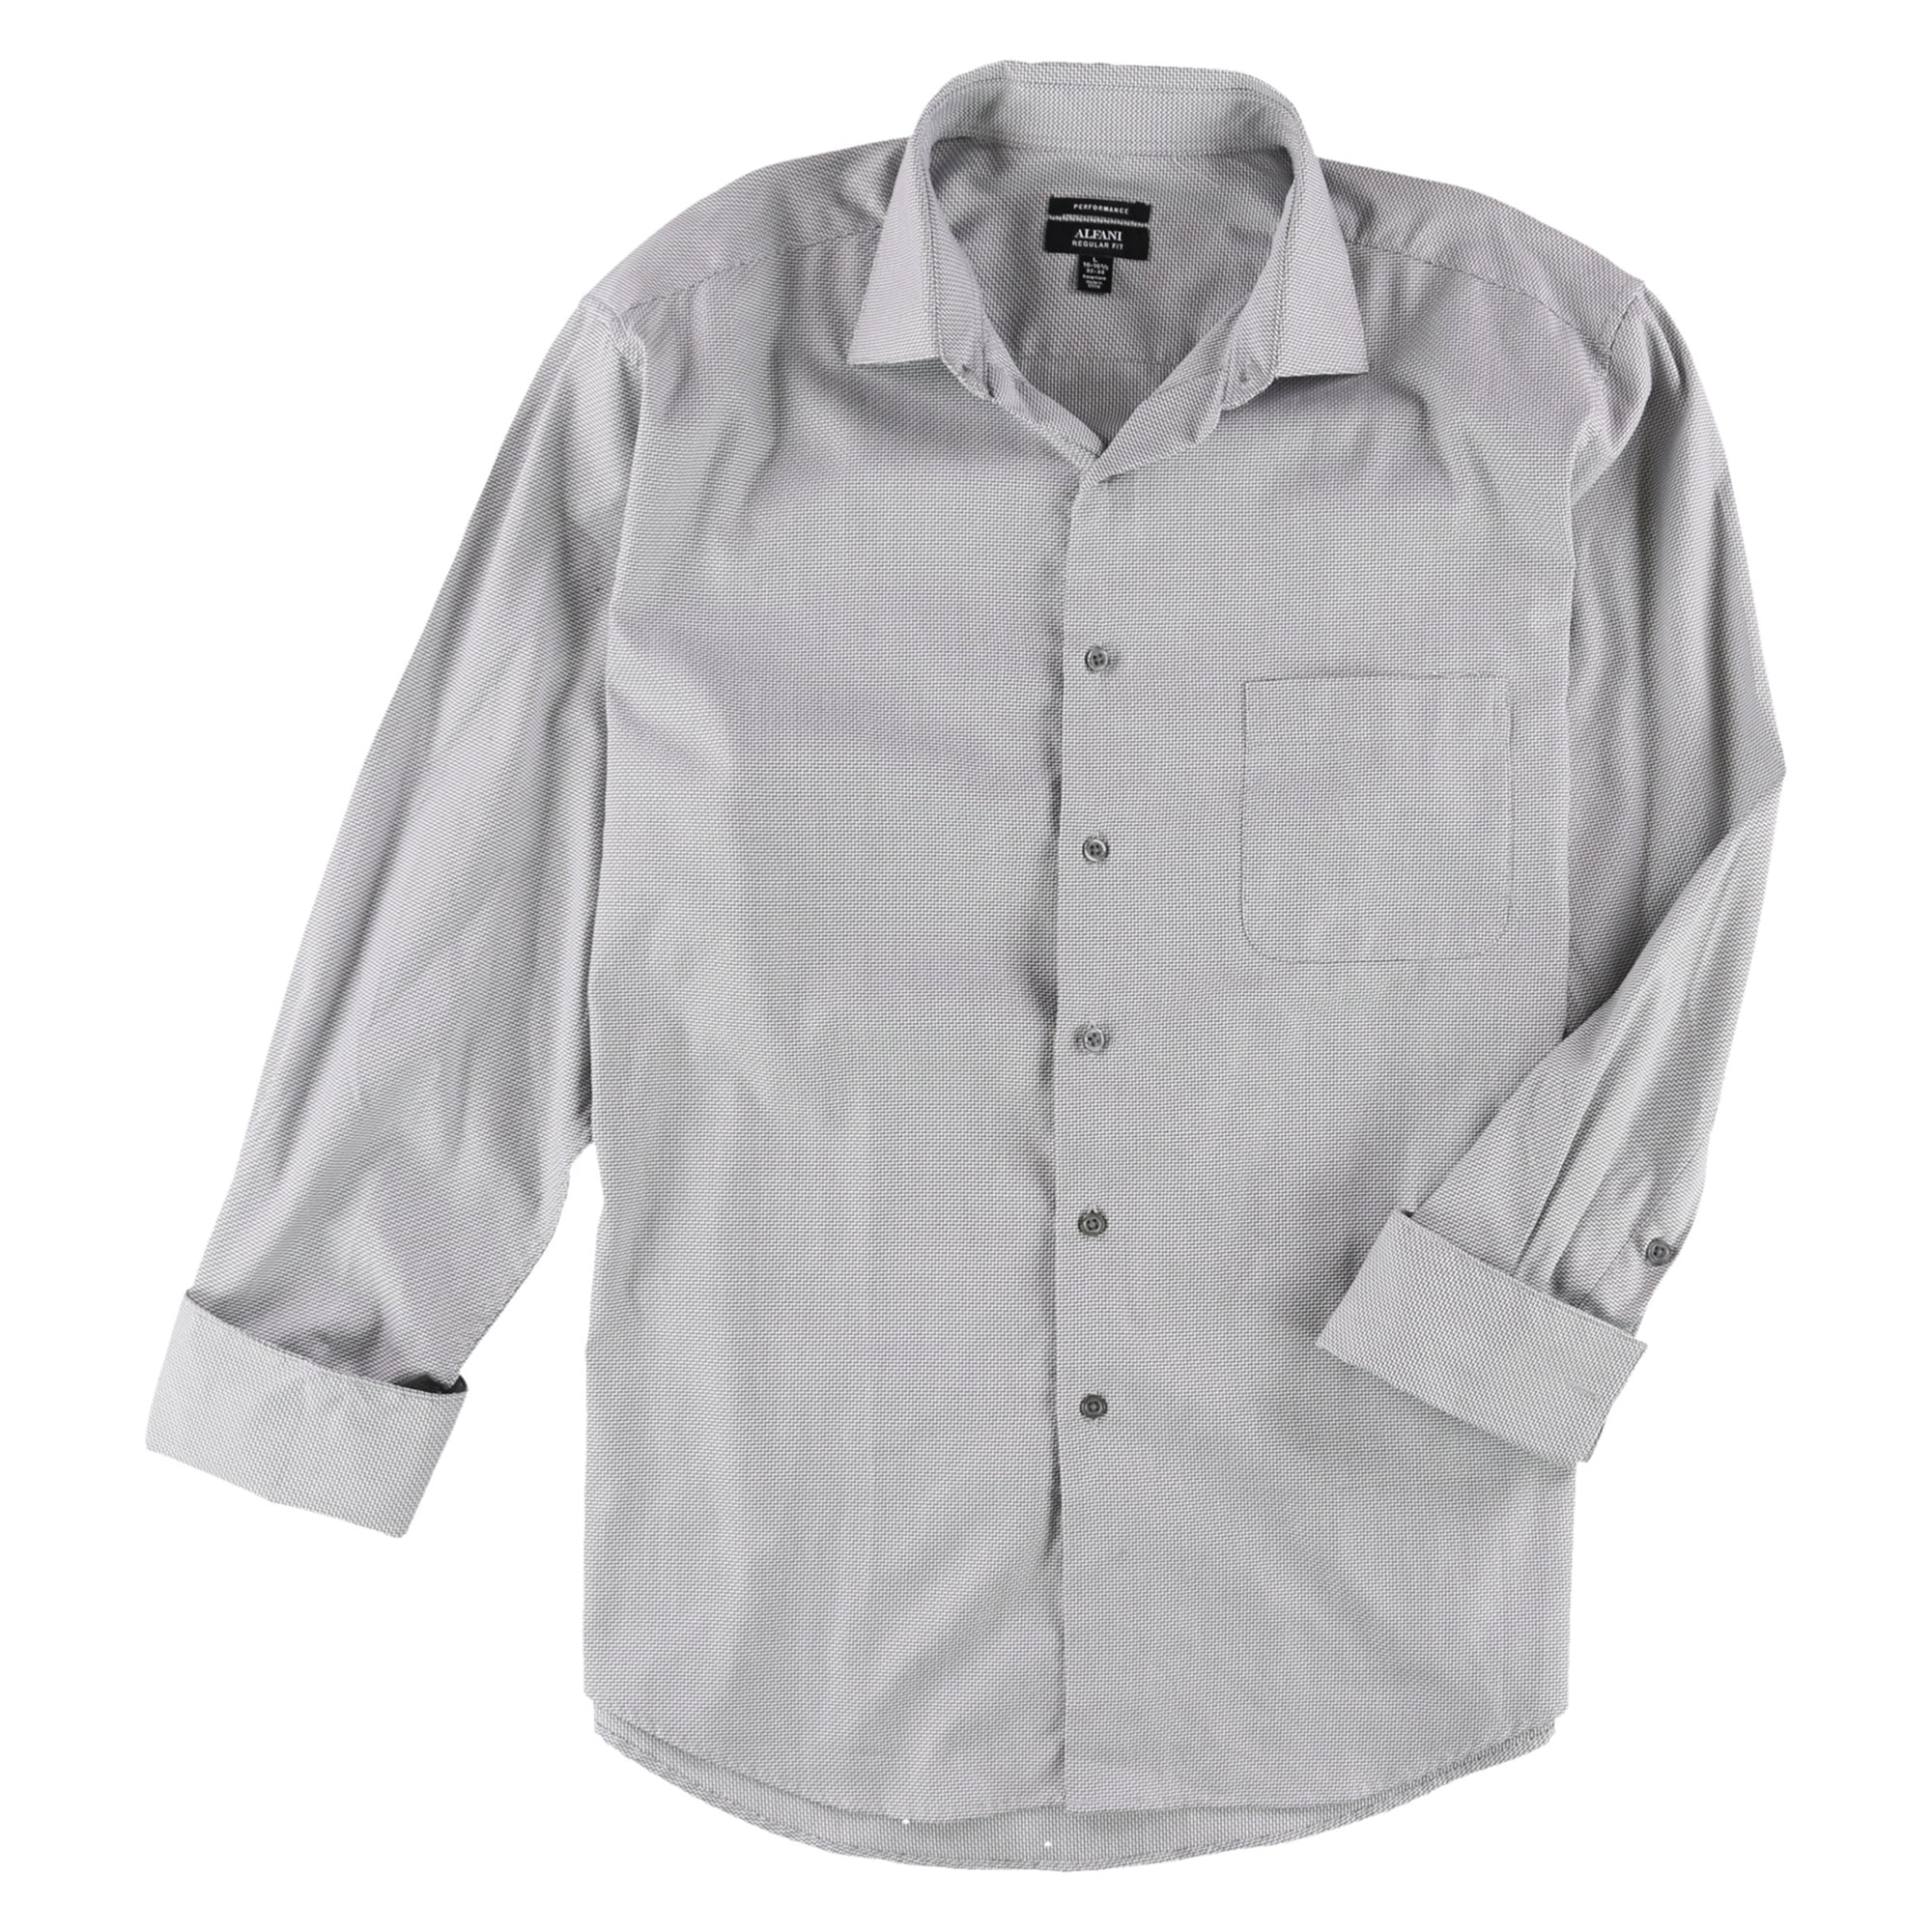 ALFANI Men's REGULAR-FIT Performance White/Grey Check long Sleeve Dress Shirt 